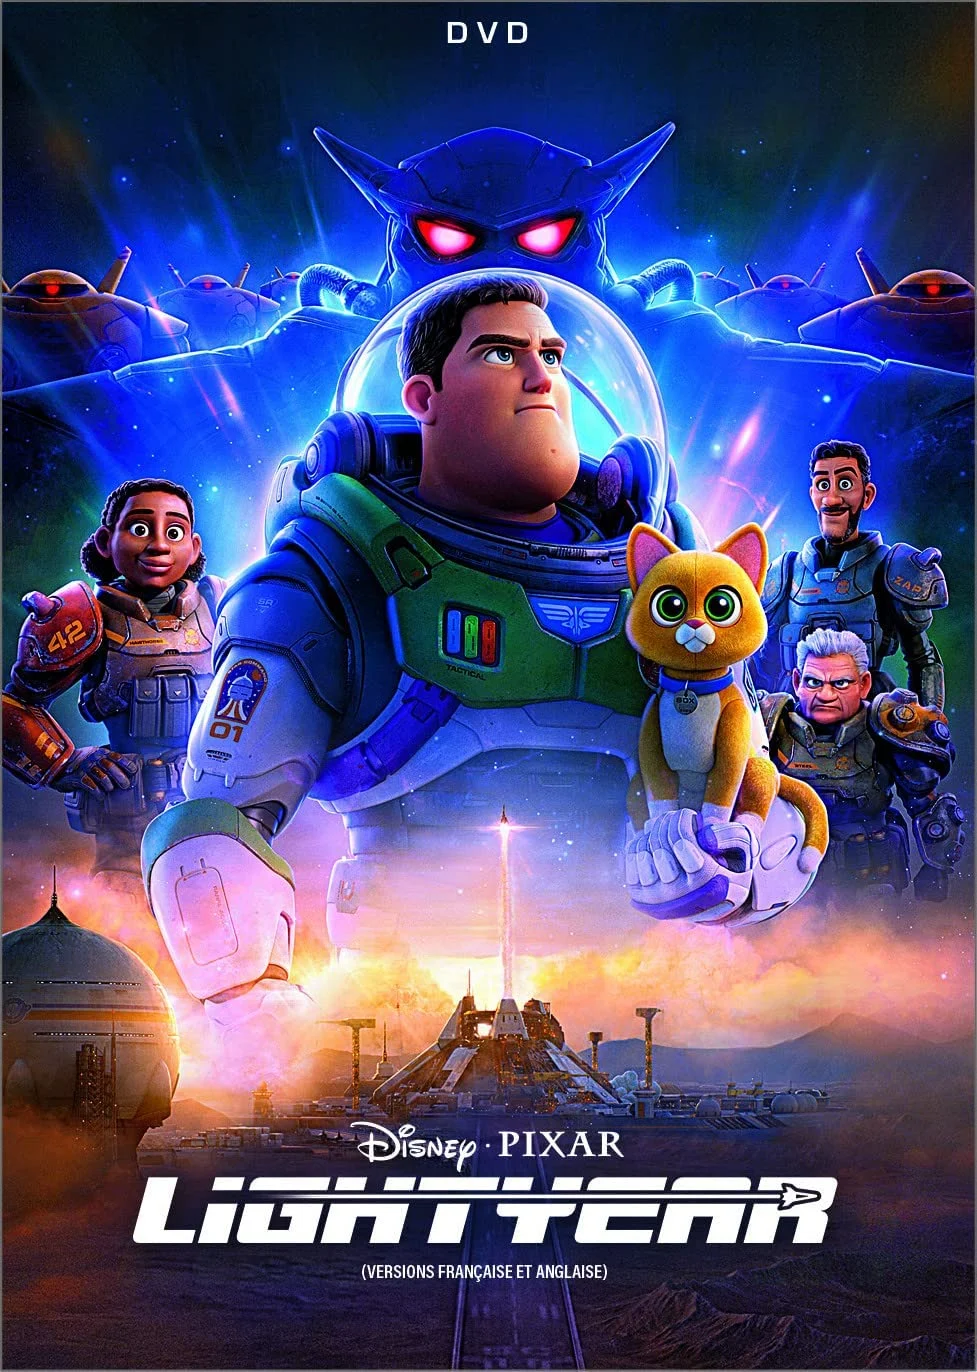 Lightyear (DVD) on MovieShack